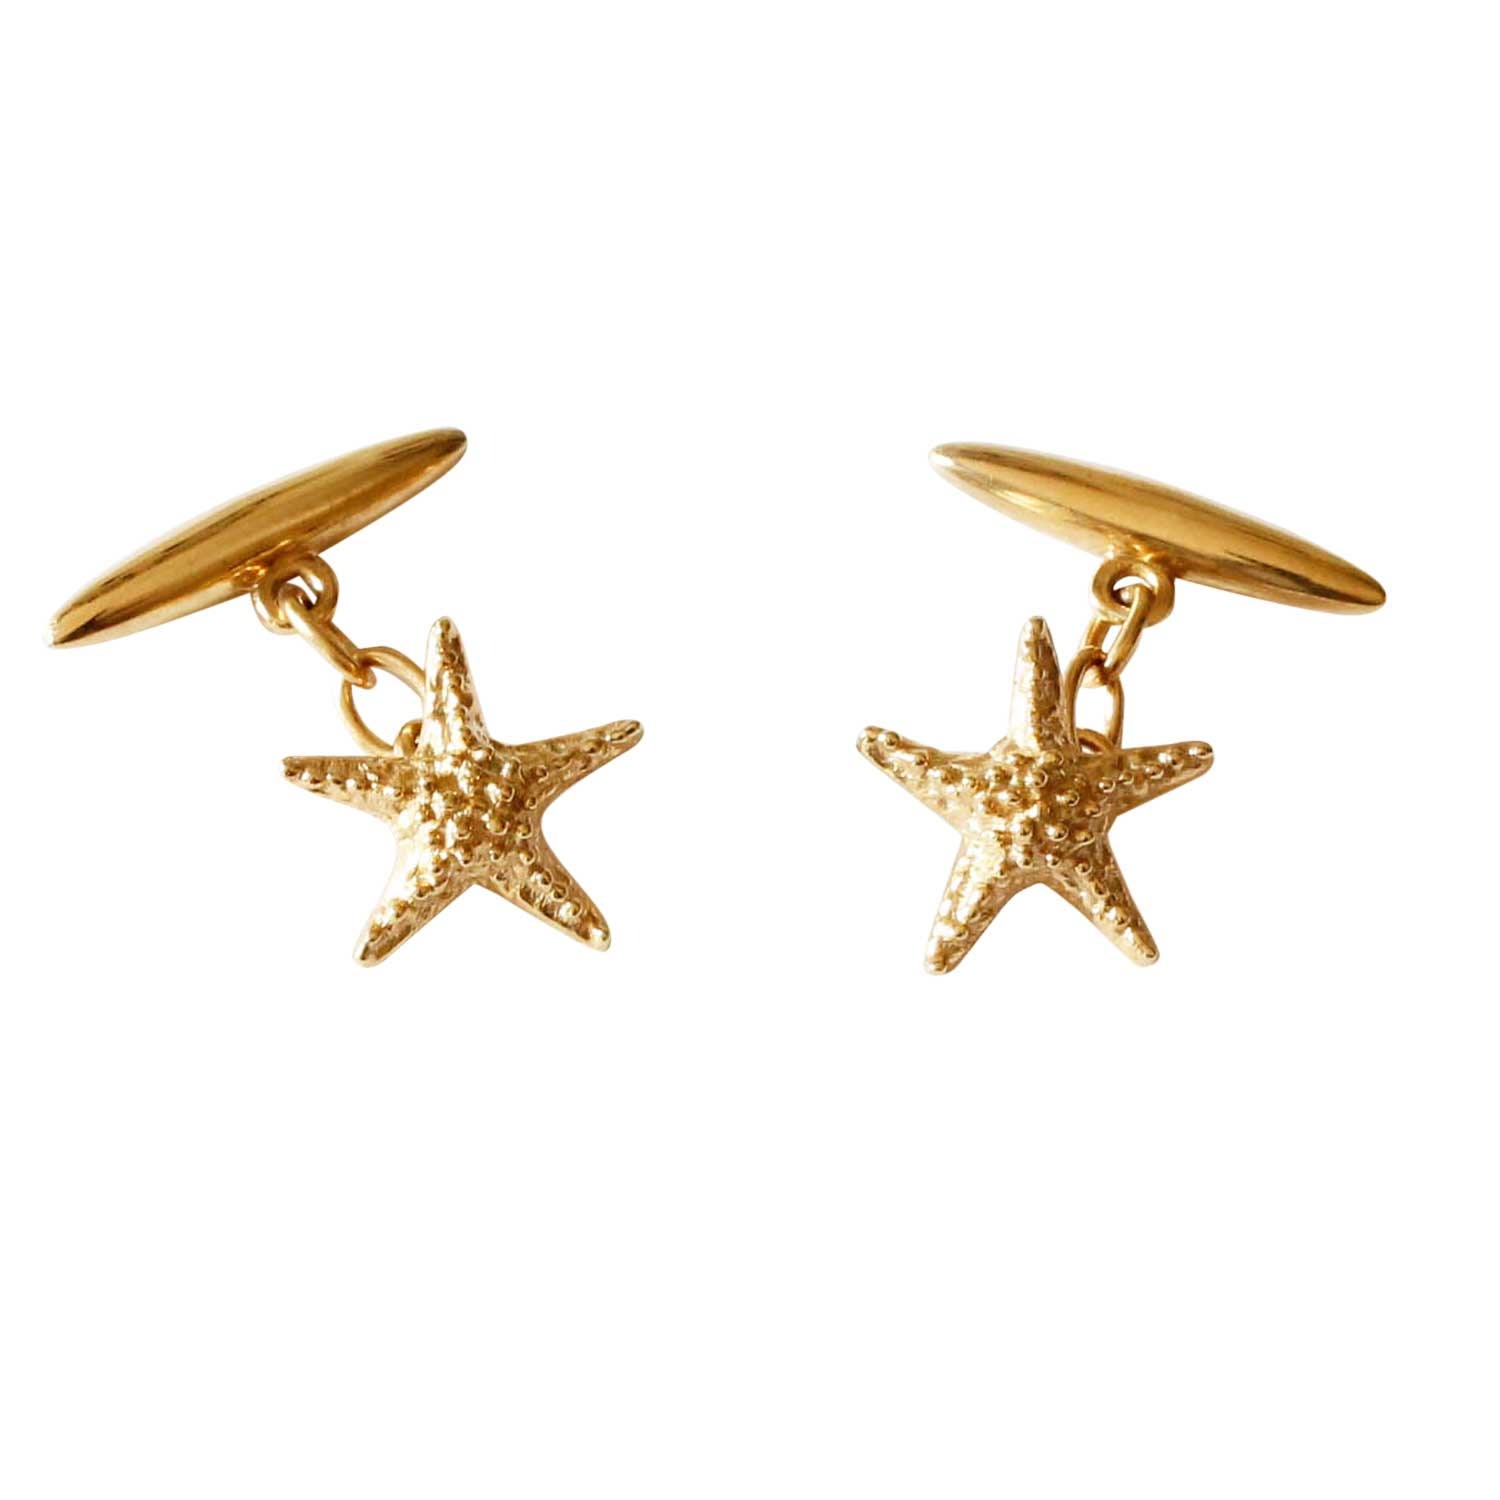 Lee Renee Men's Starfish Cufflinks- Gold